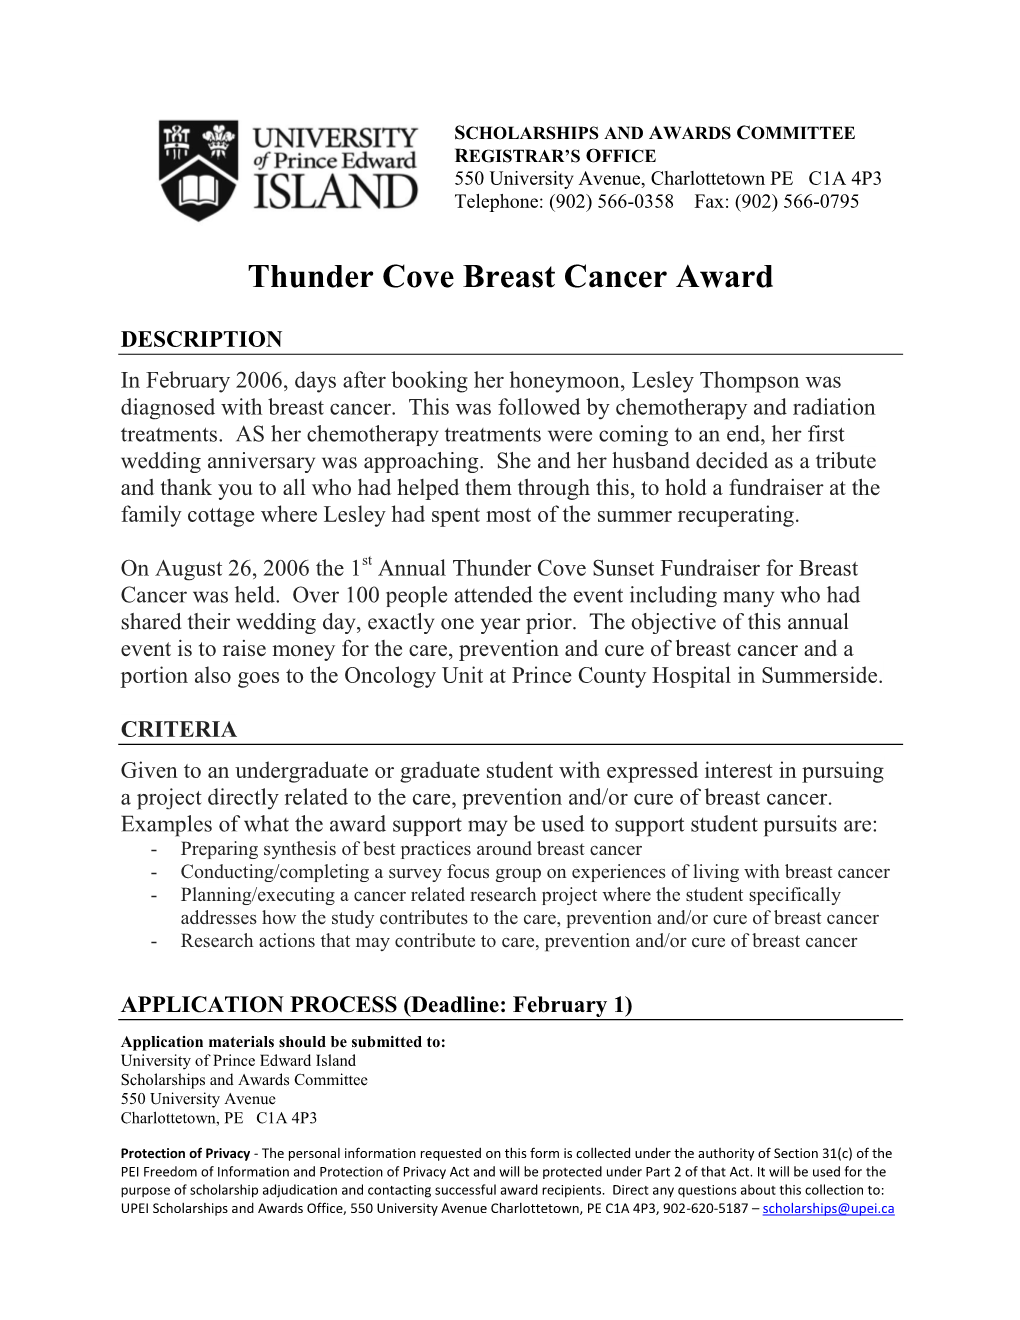 Thunder Cove Breast Cancer Award